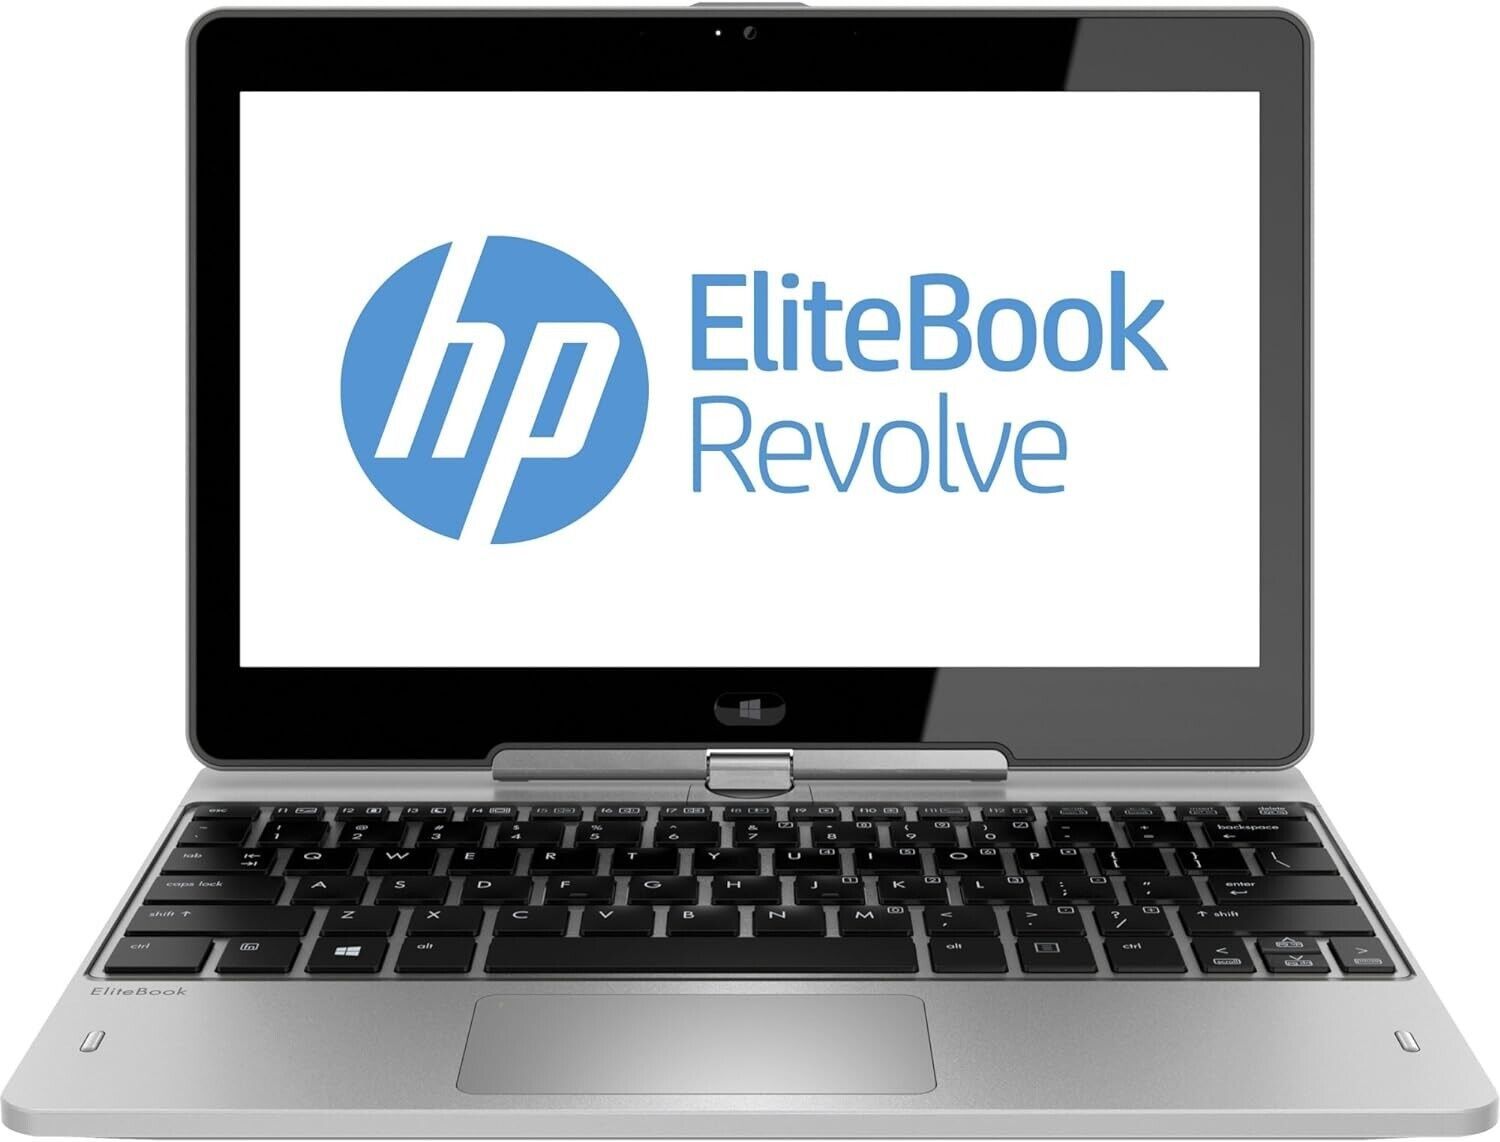 eBay Refurbished 
HP EliteBook Tablet PC 810G2 i5 4G LTE 8GB Ram 256GB NVMe W... - $274.35